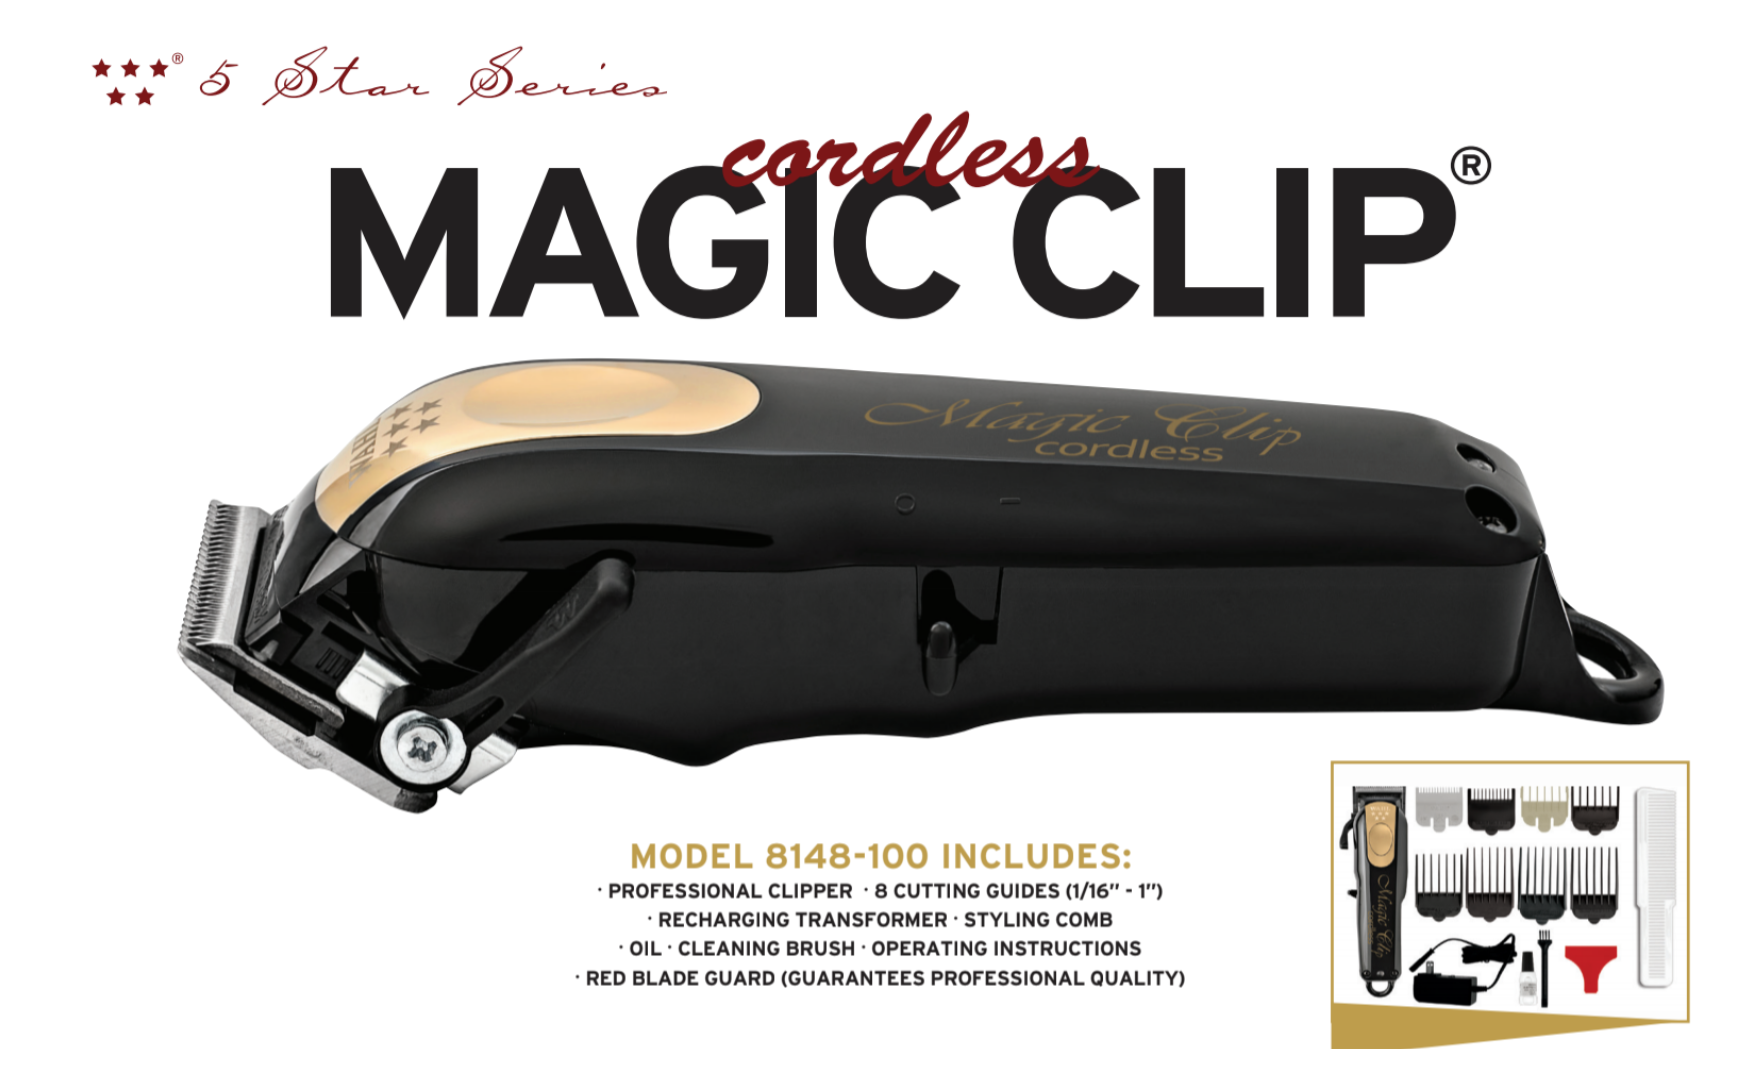 magic clip cordless black and gold